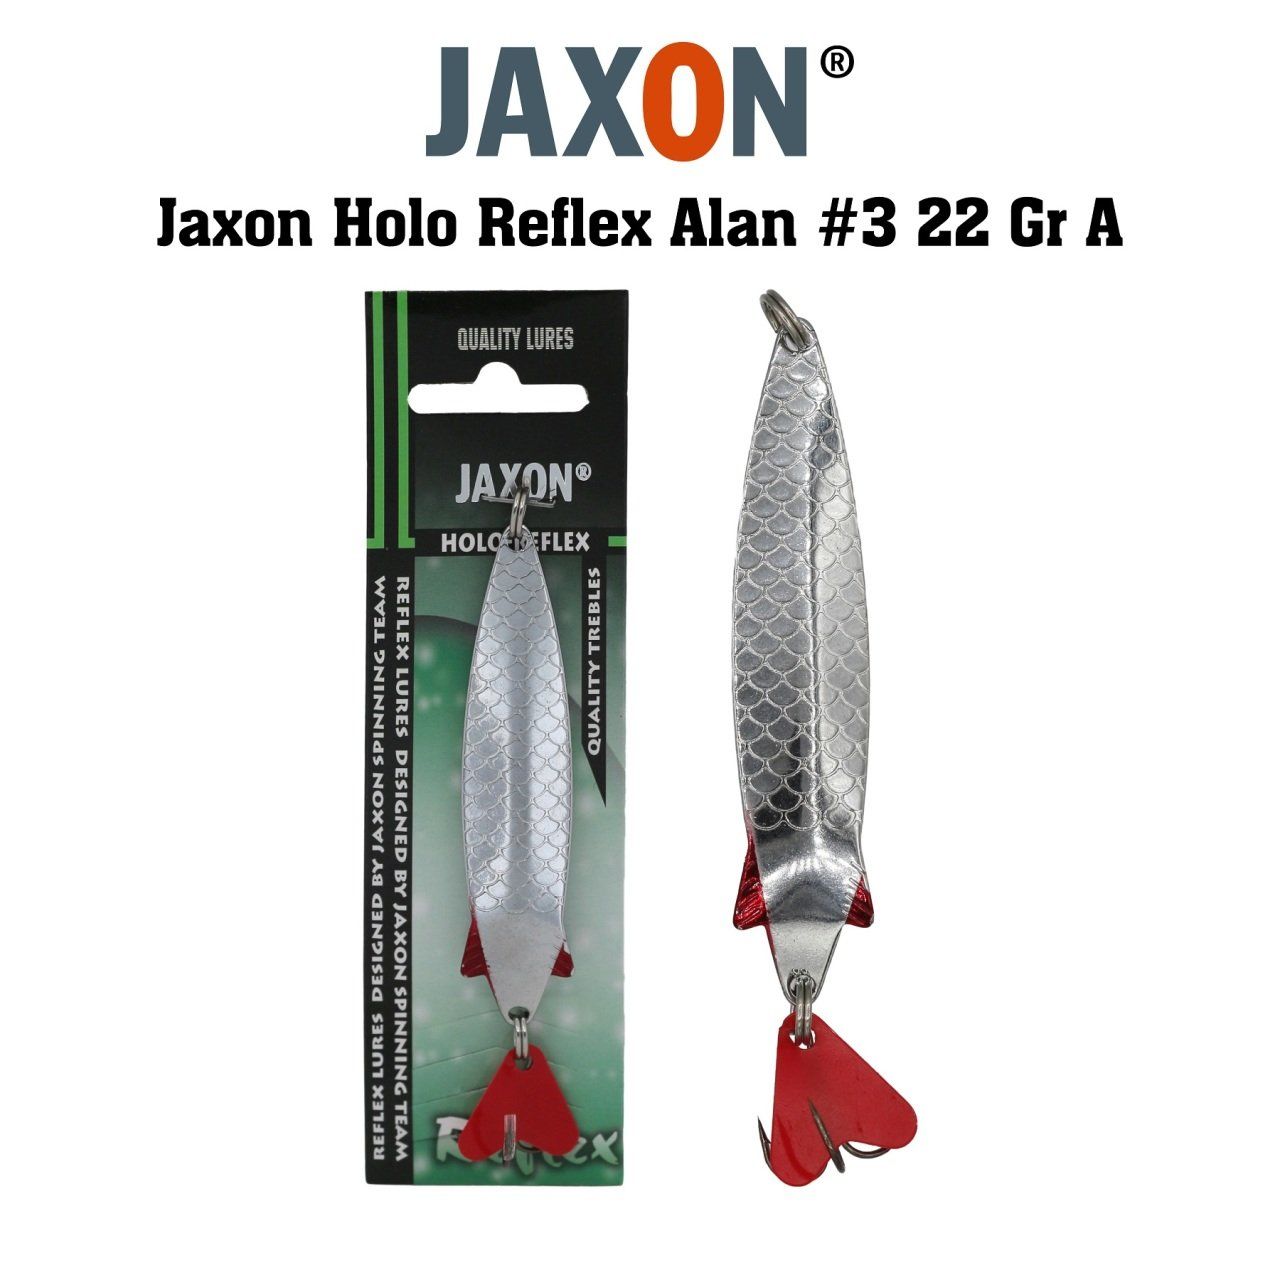 Jaxon Holo Reflex Alan #3 22Gr A